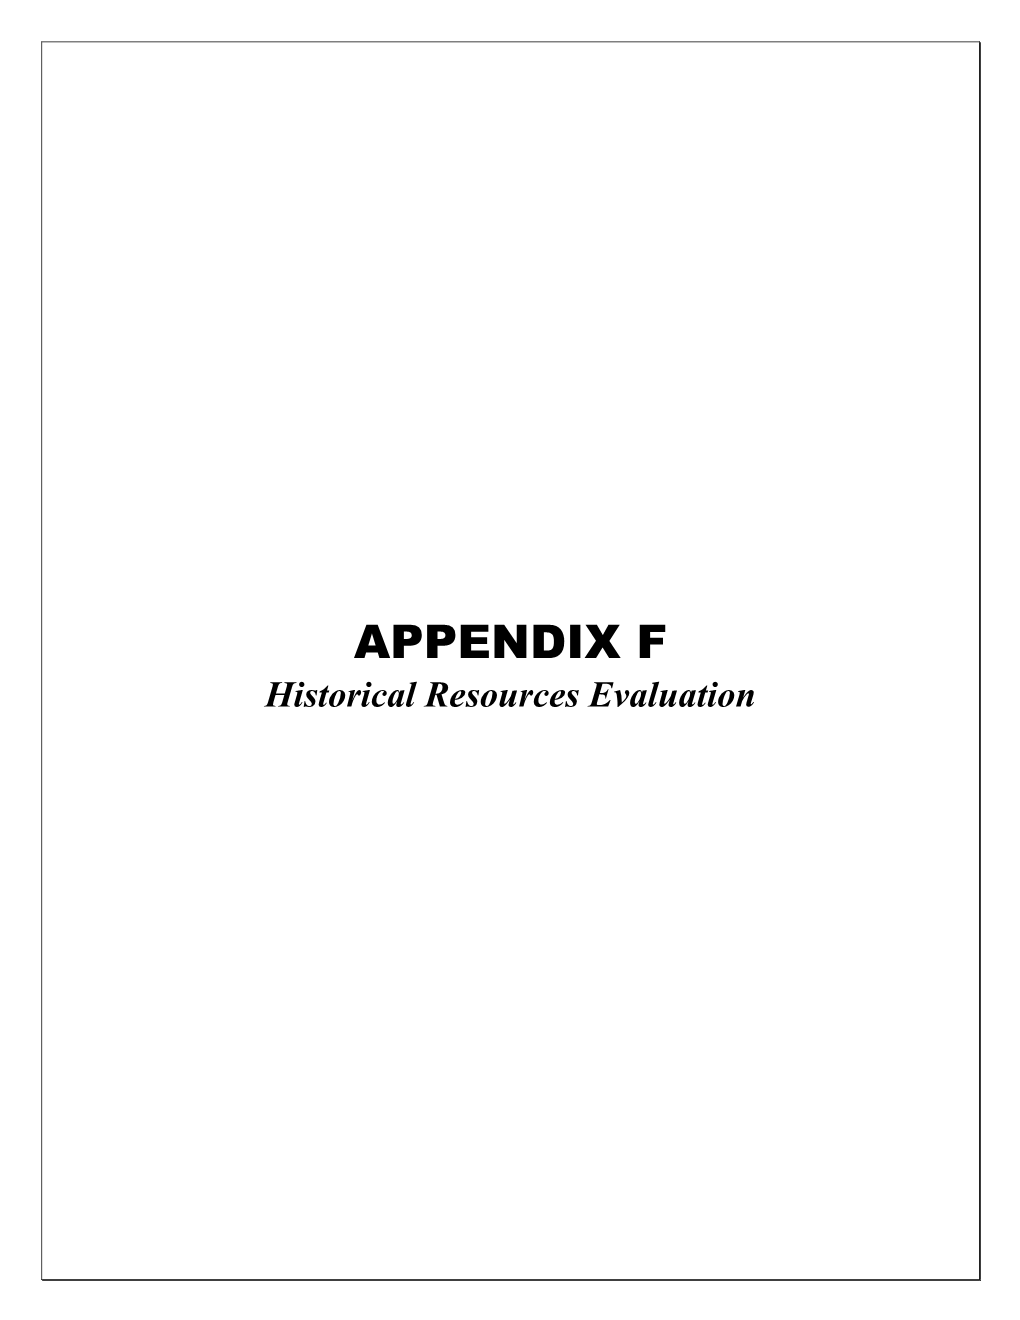 APPENDIX F Historical Resources Evaluation